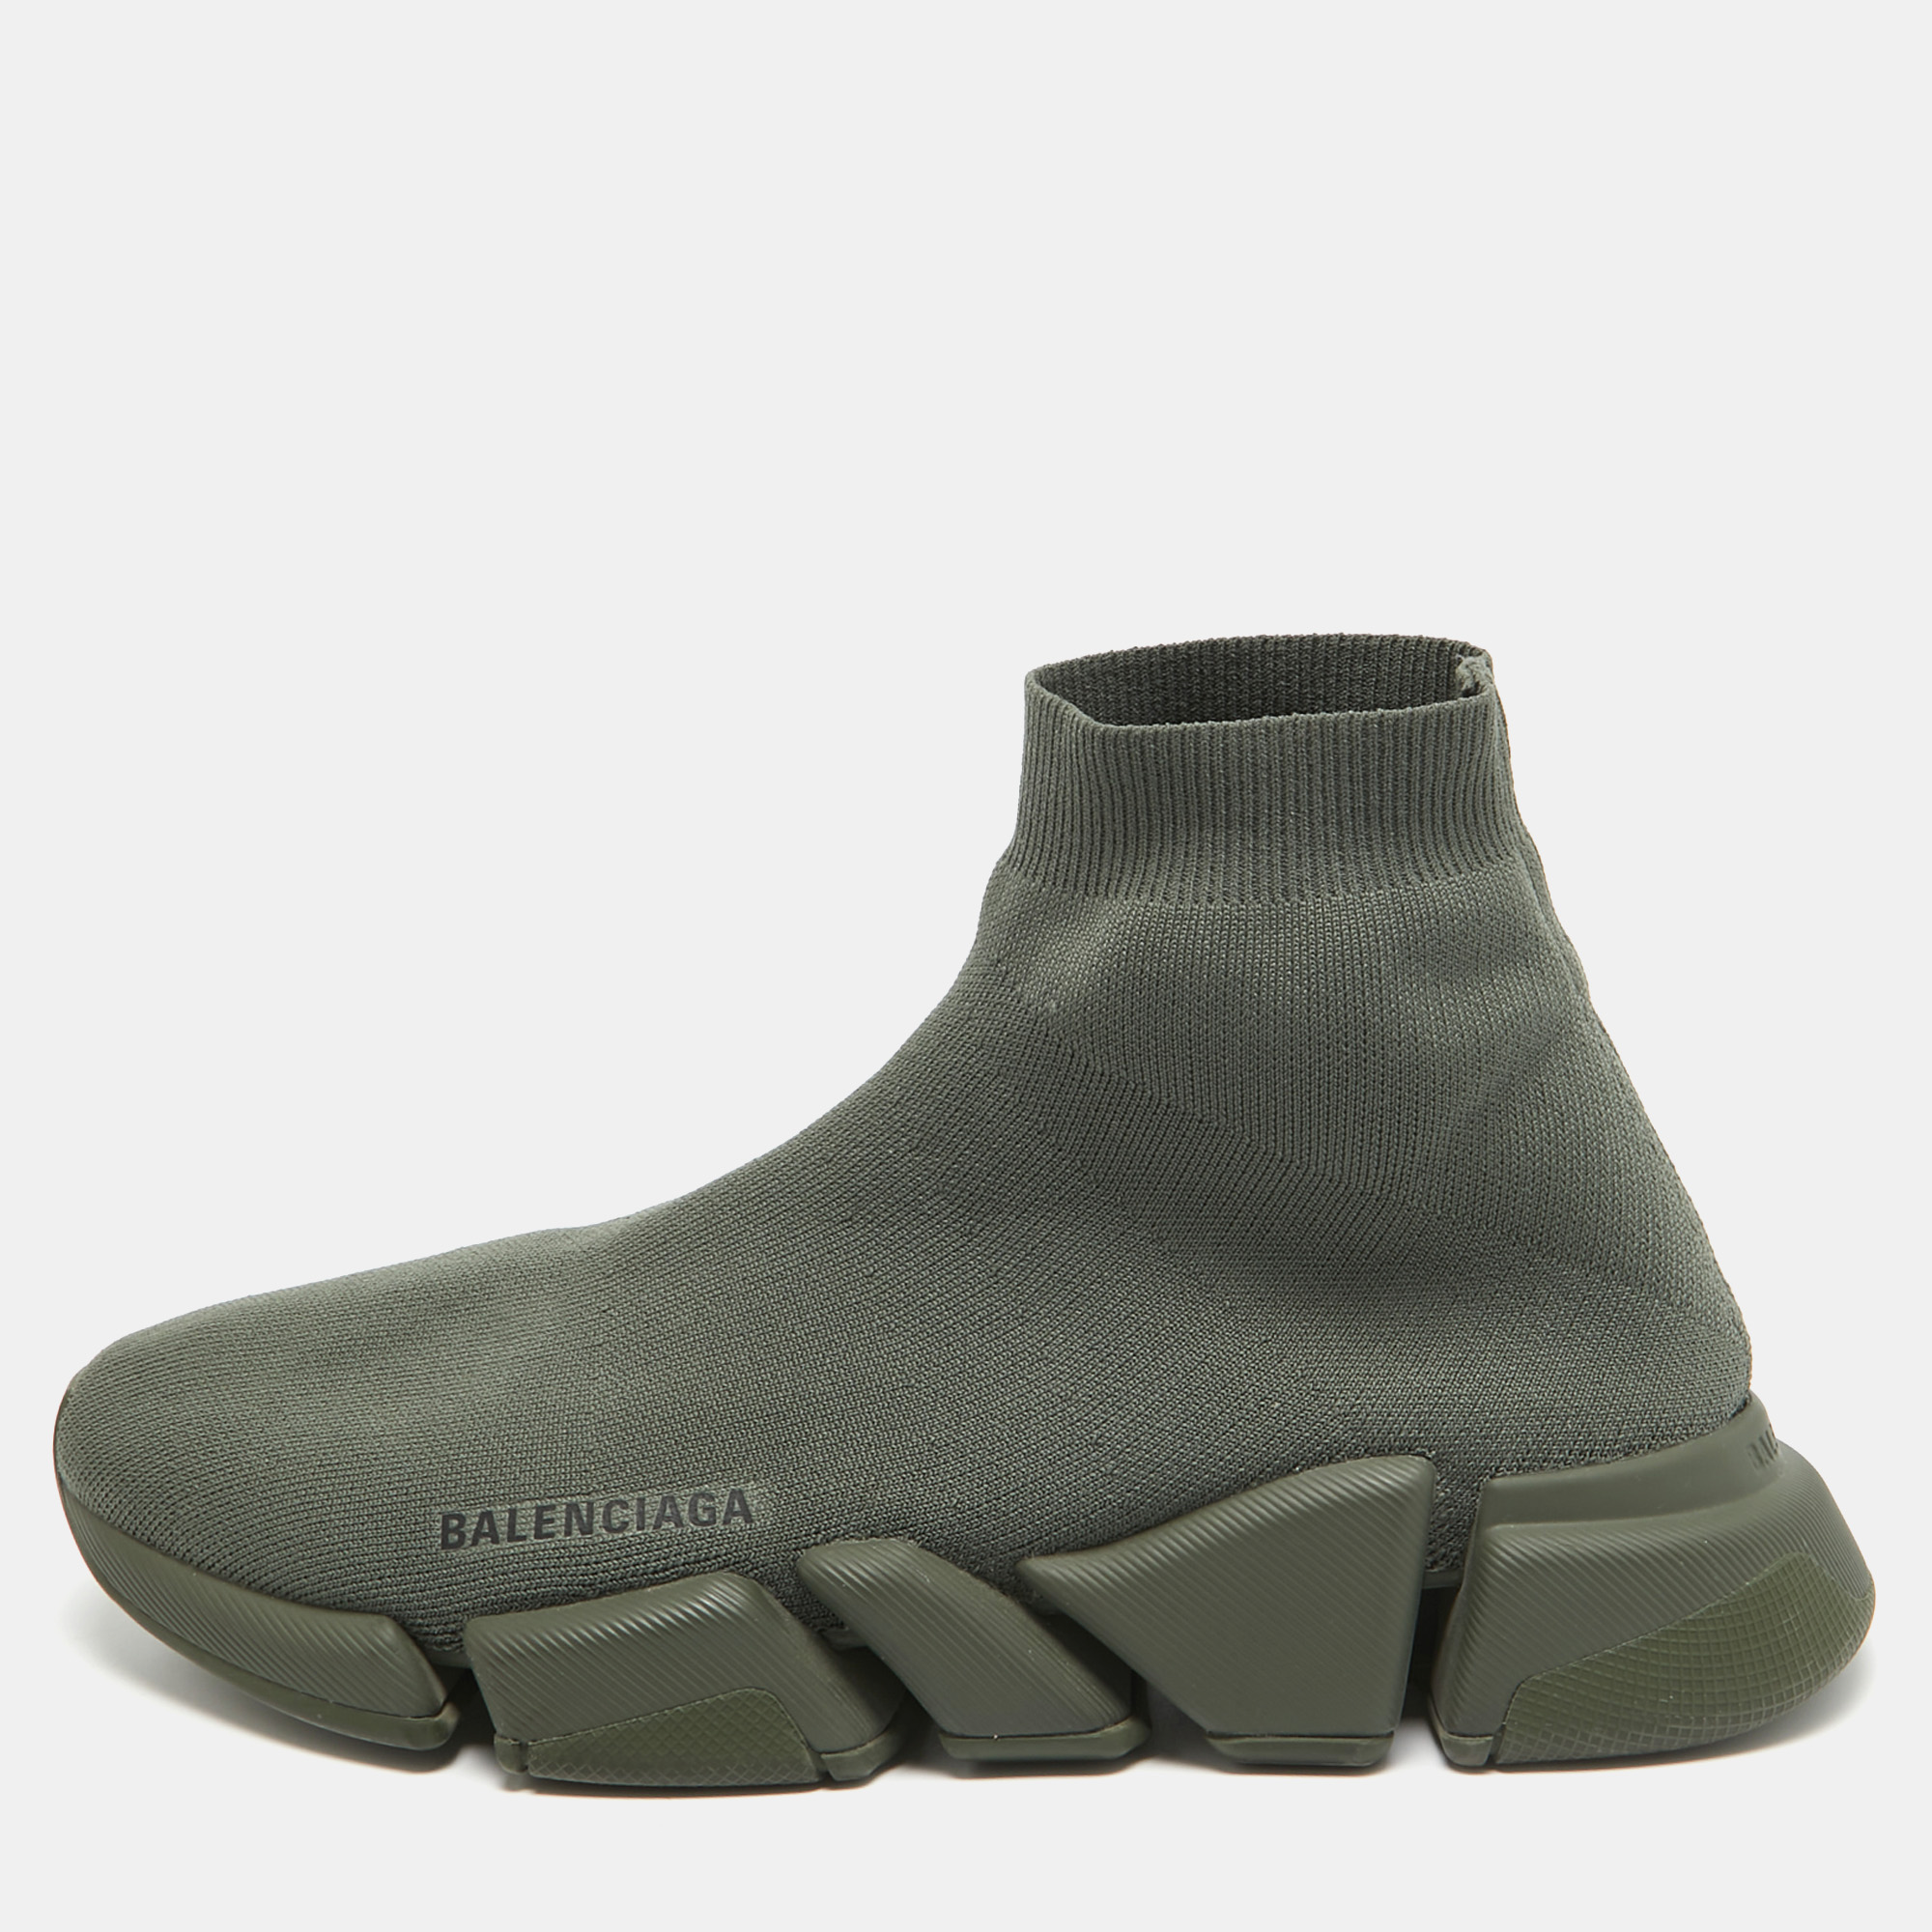 Balenciaga green knit fabric speed 2.0 high top sneakers size 42